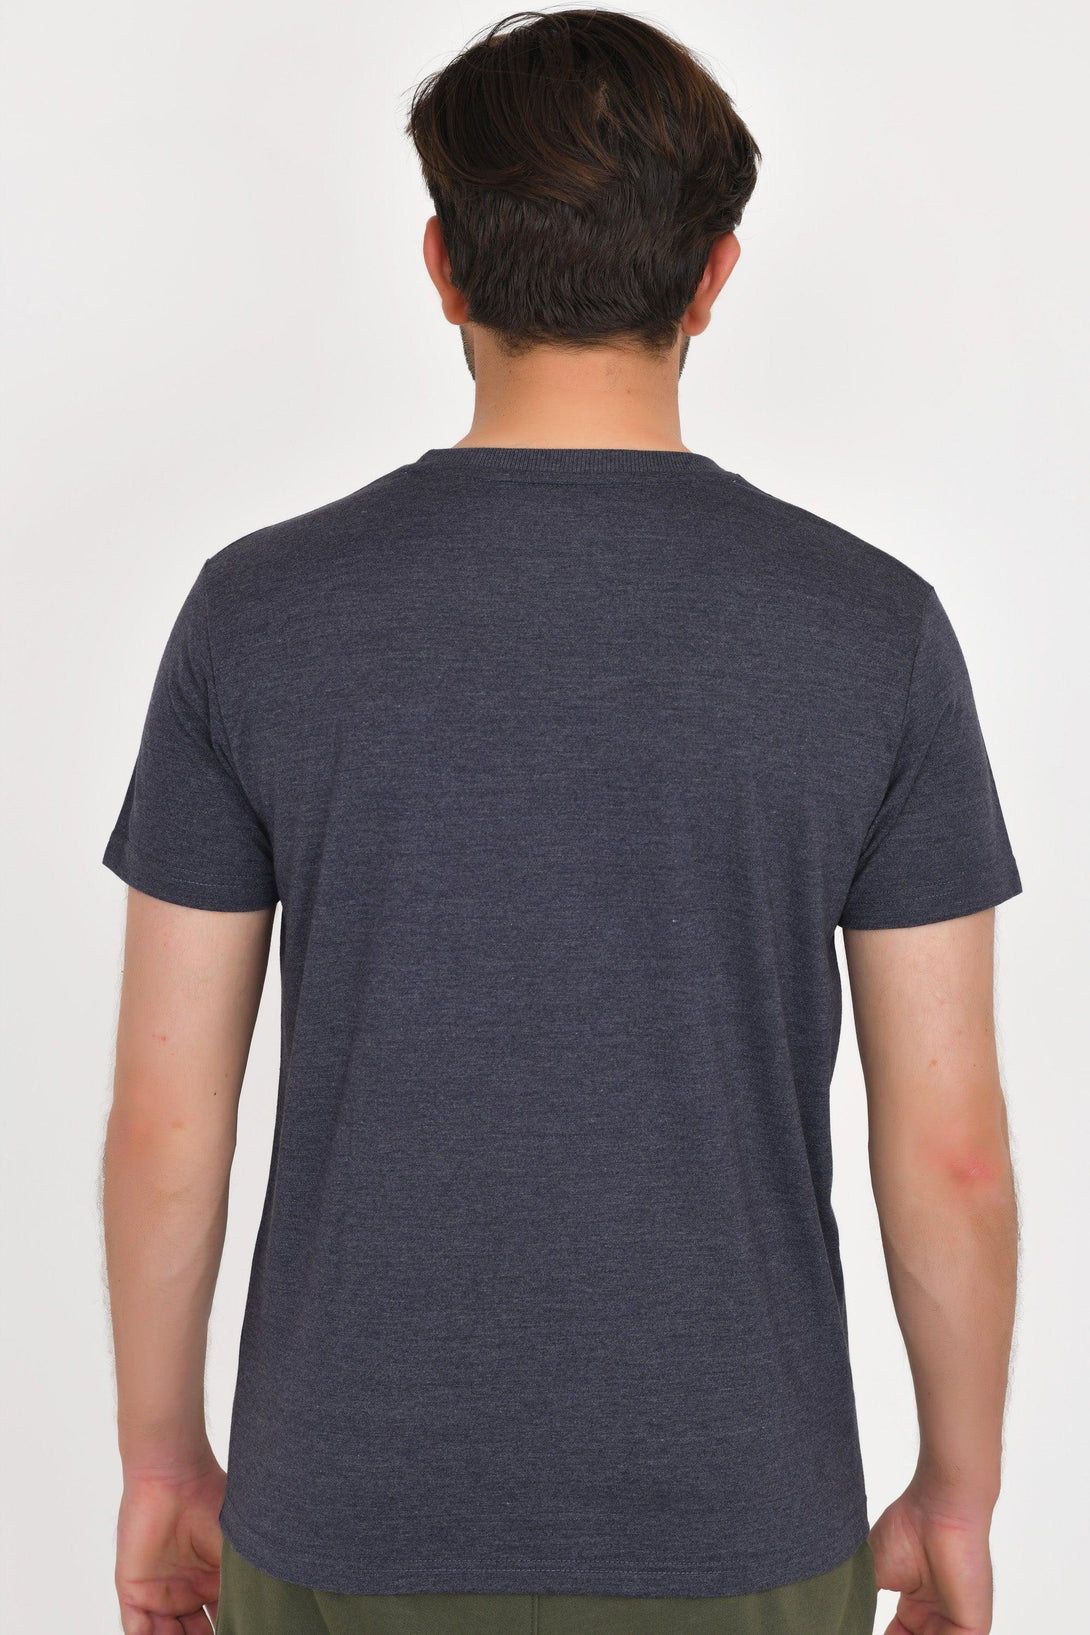 Round Neck T-Shirts | NAVY MELANGE - AQUA - STONE - Pack of 3 - FTS